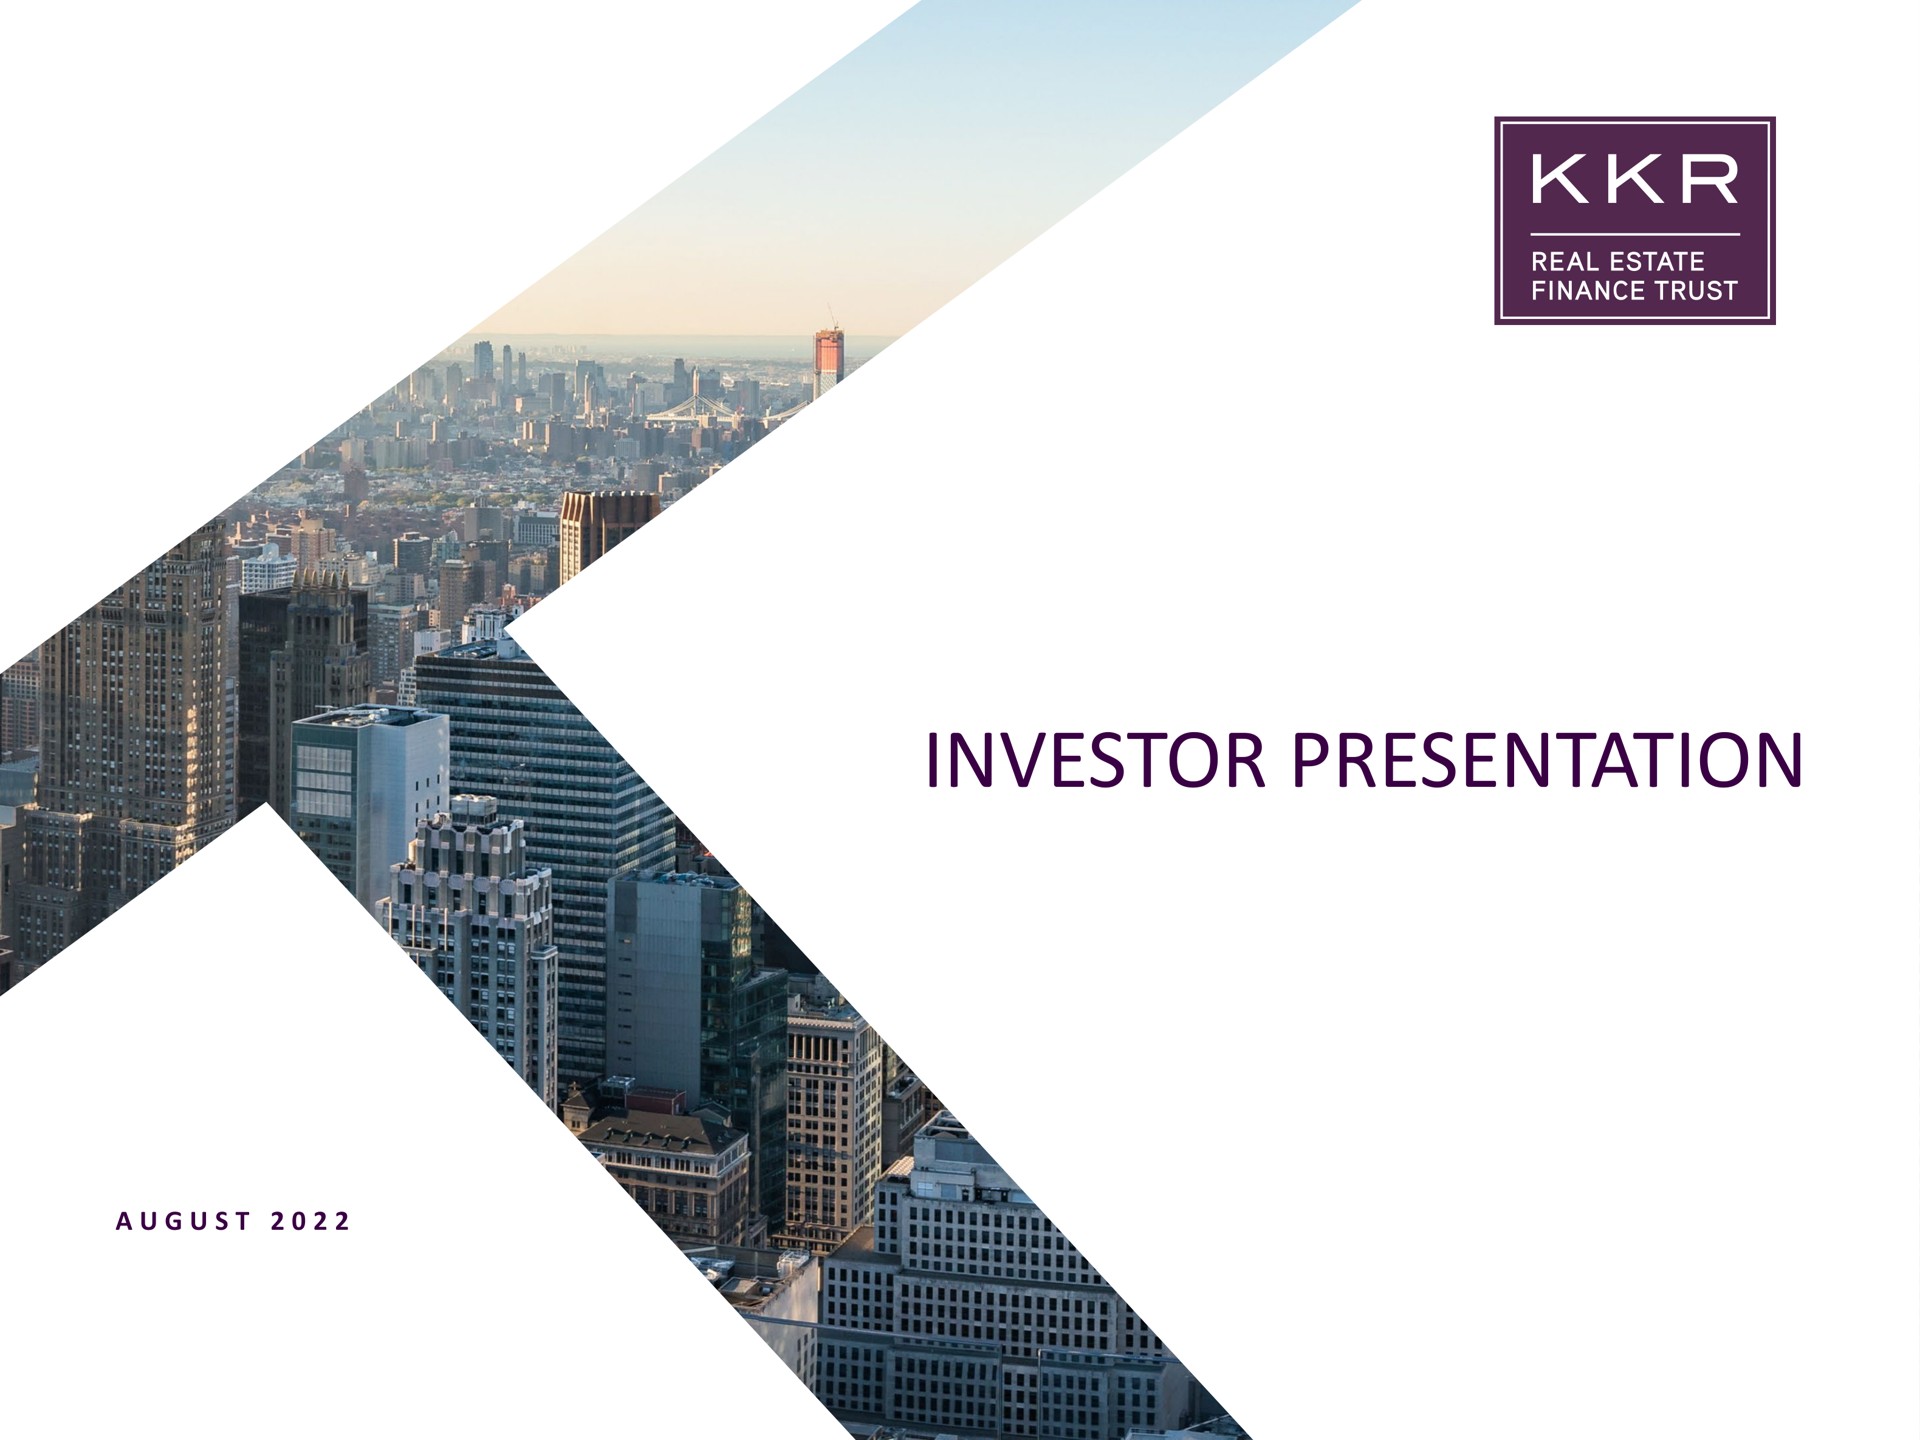 investor presentation gan | KKR Real Estate Finance Trust